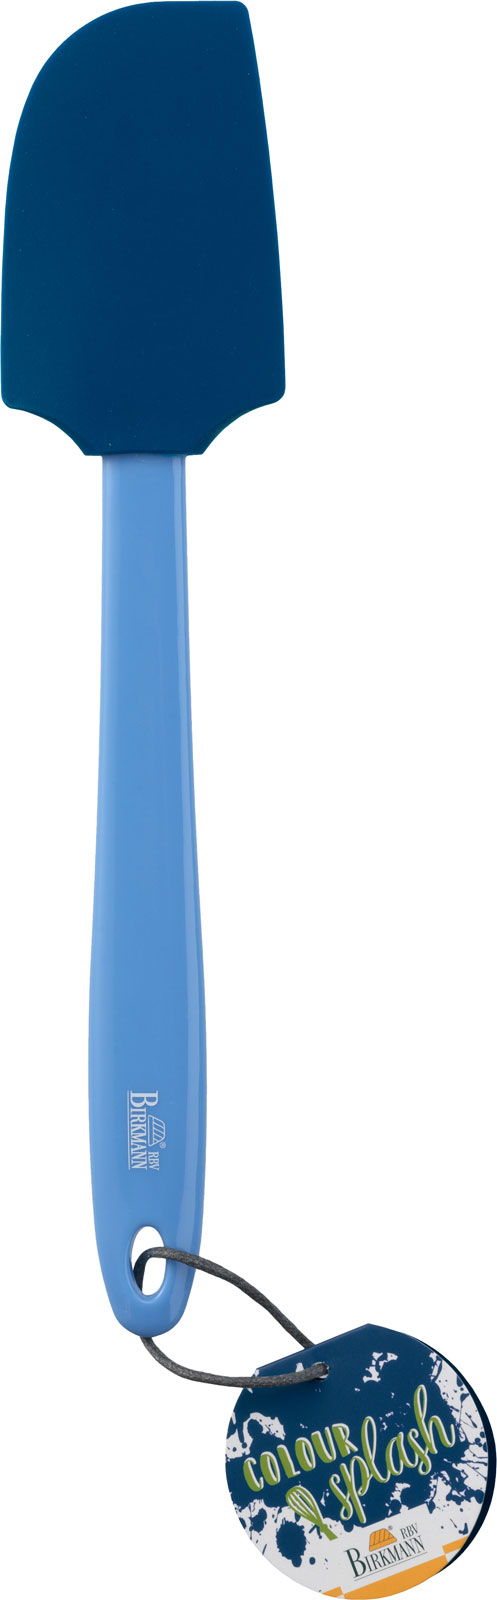 RBV Birkmann Colour Splash Teigschaber 29 cm blau Silikon